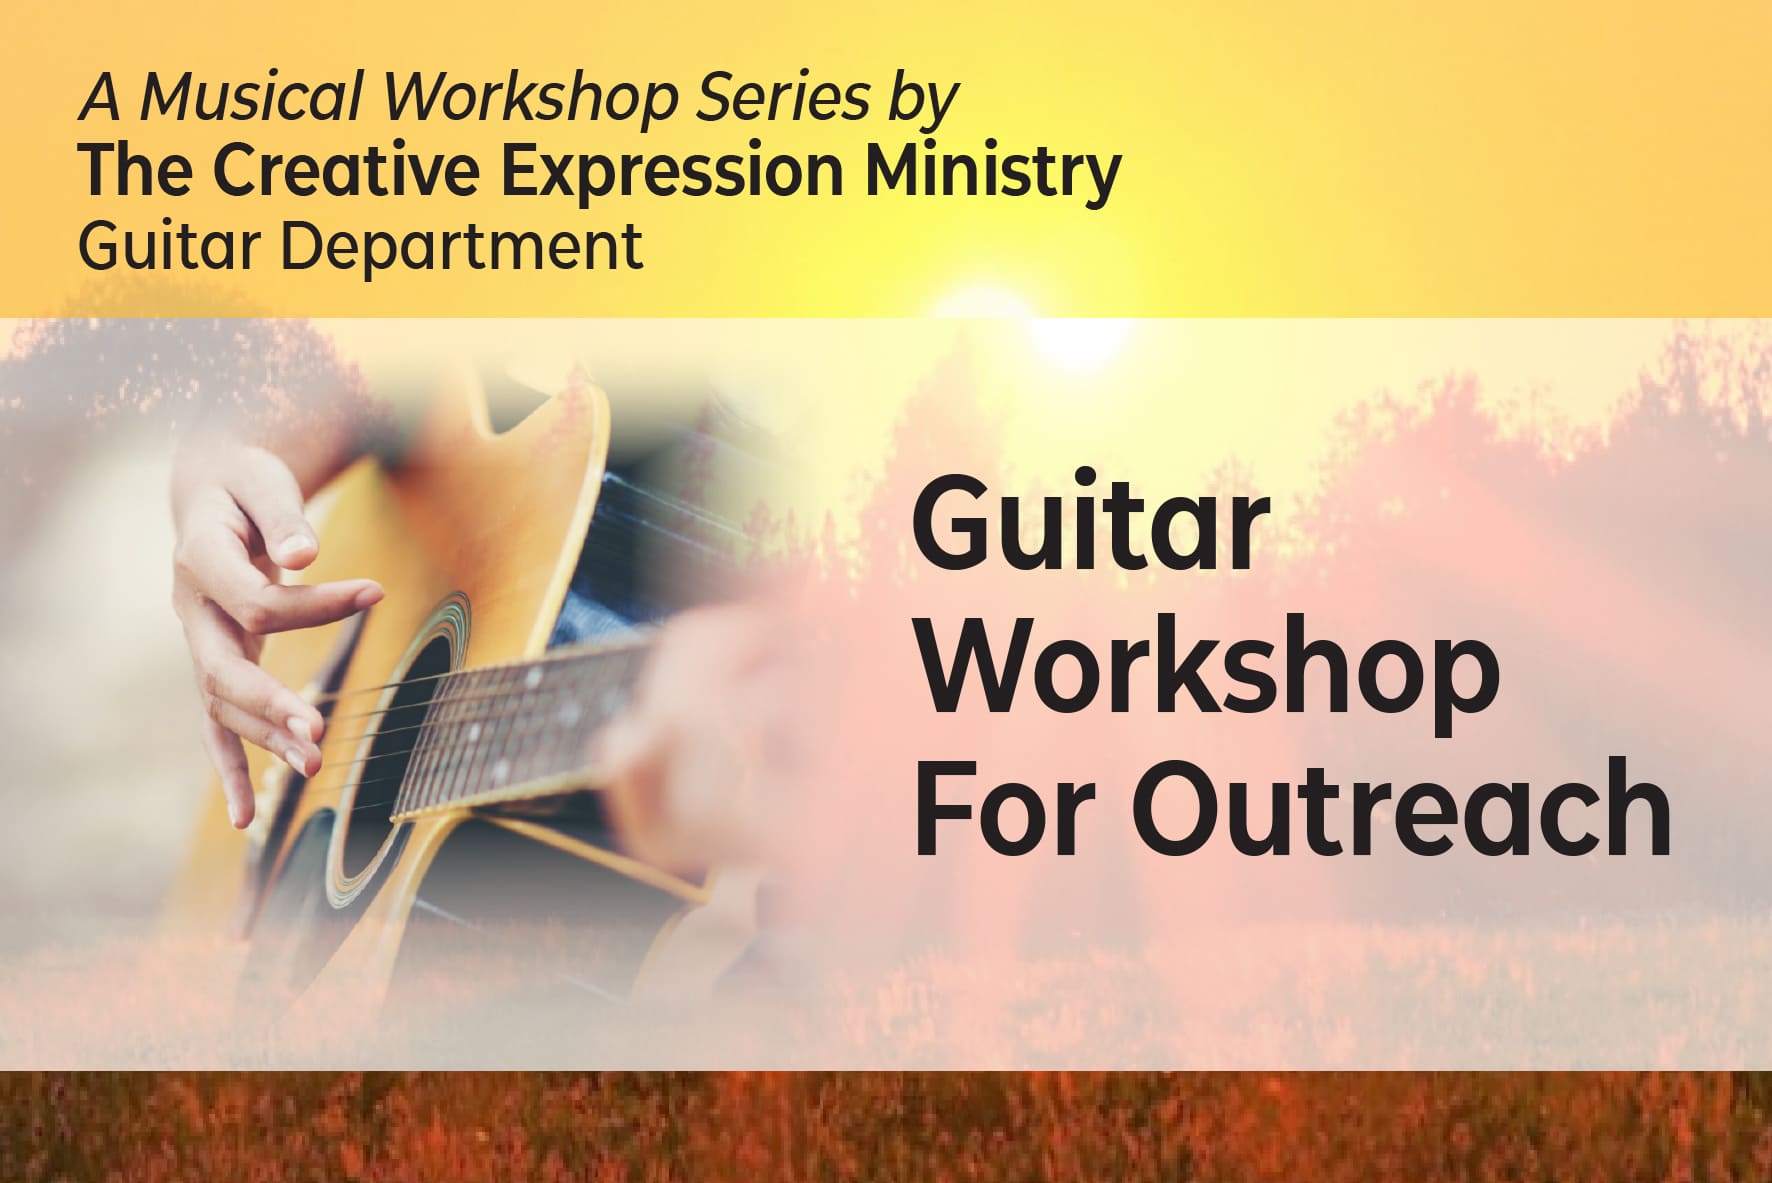 Guitar Workshop For Outreach